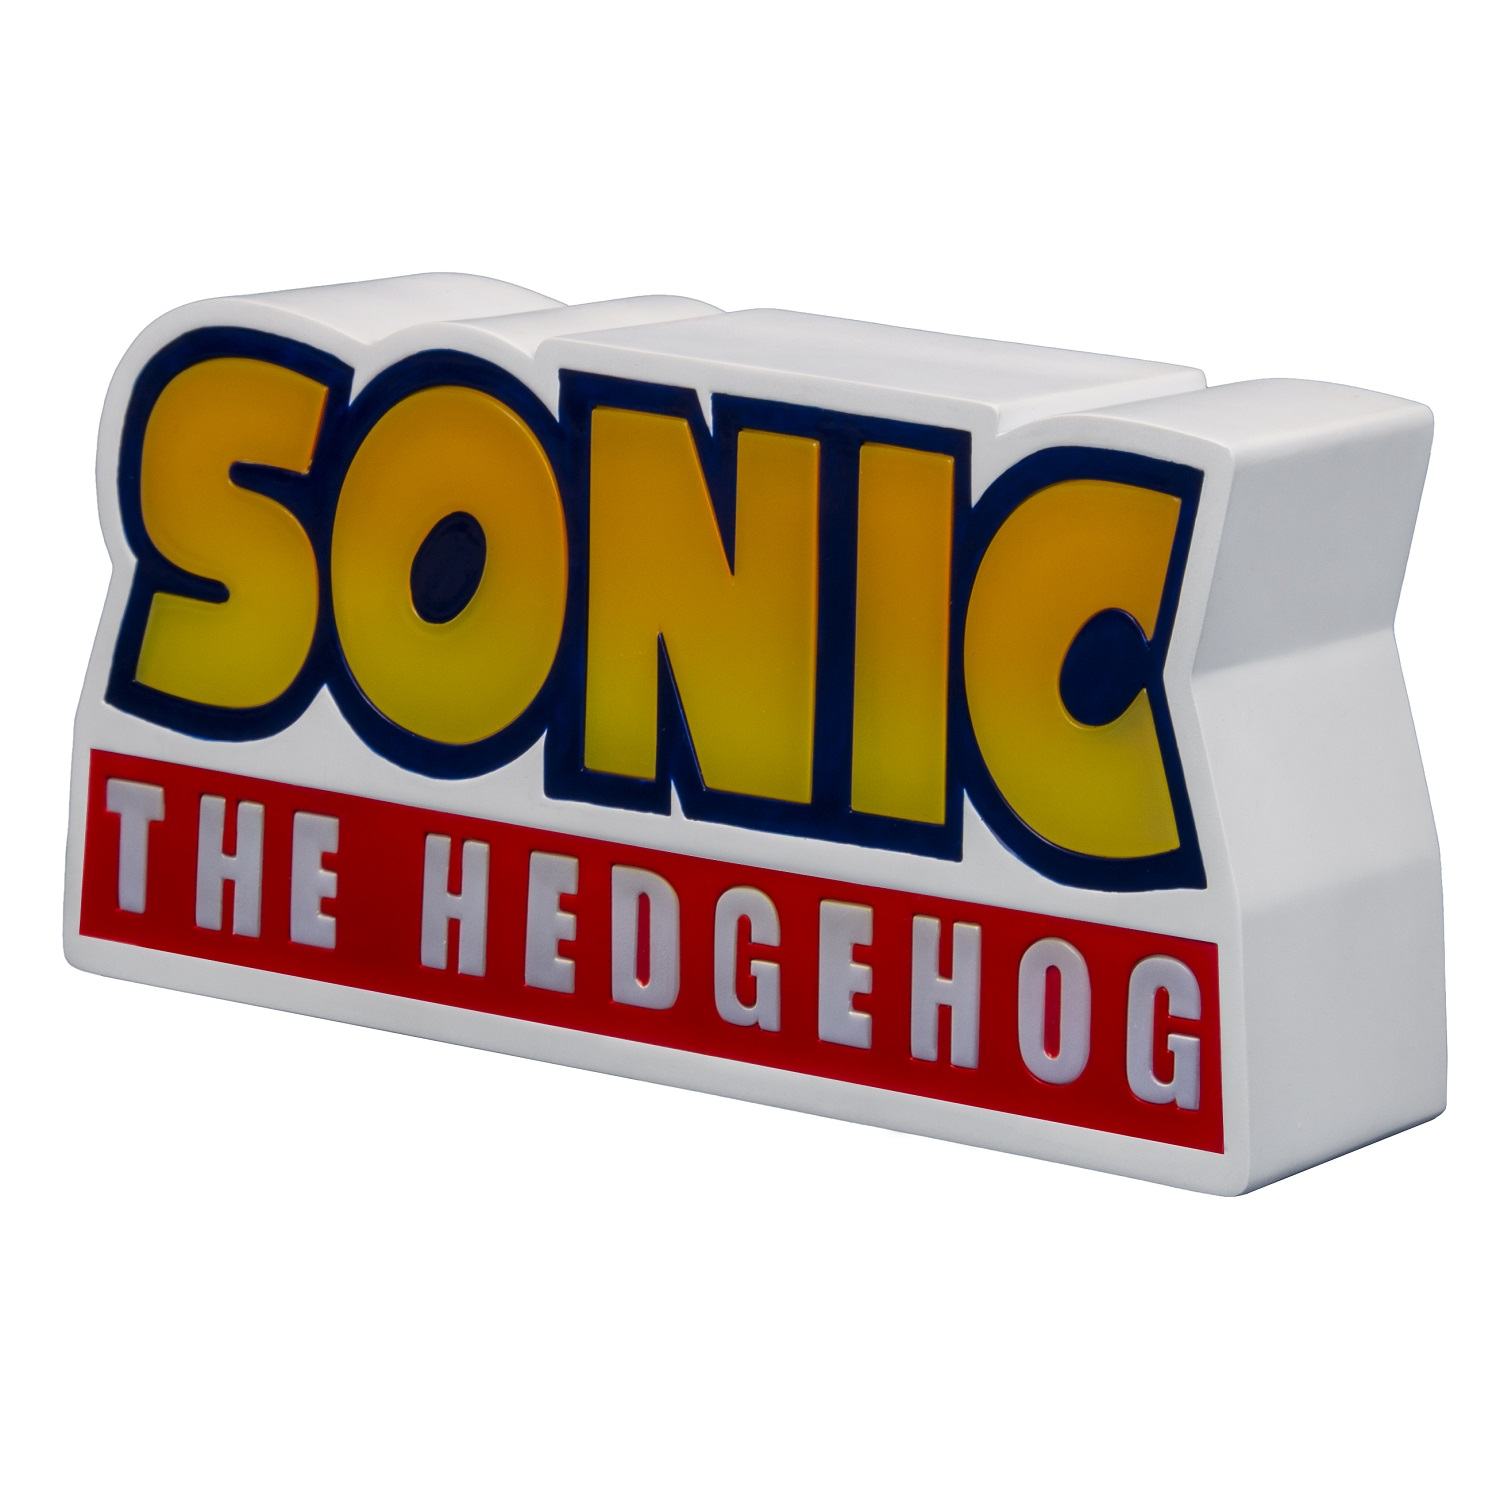 Hedgehog Logo Sonic The